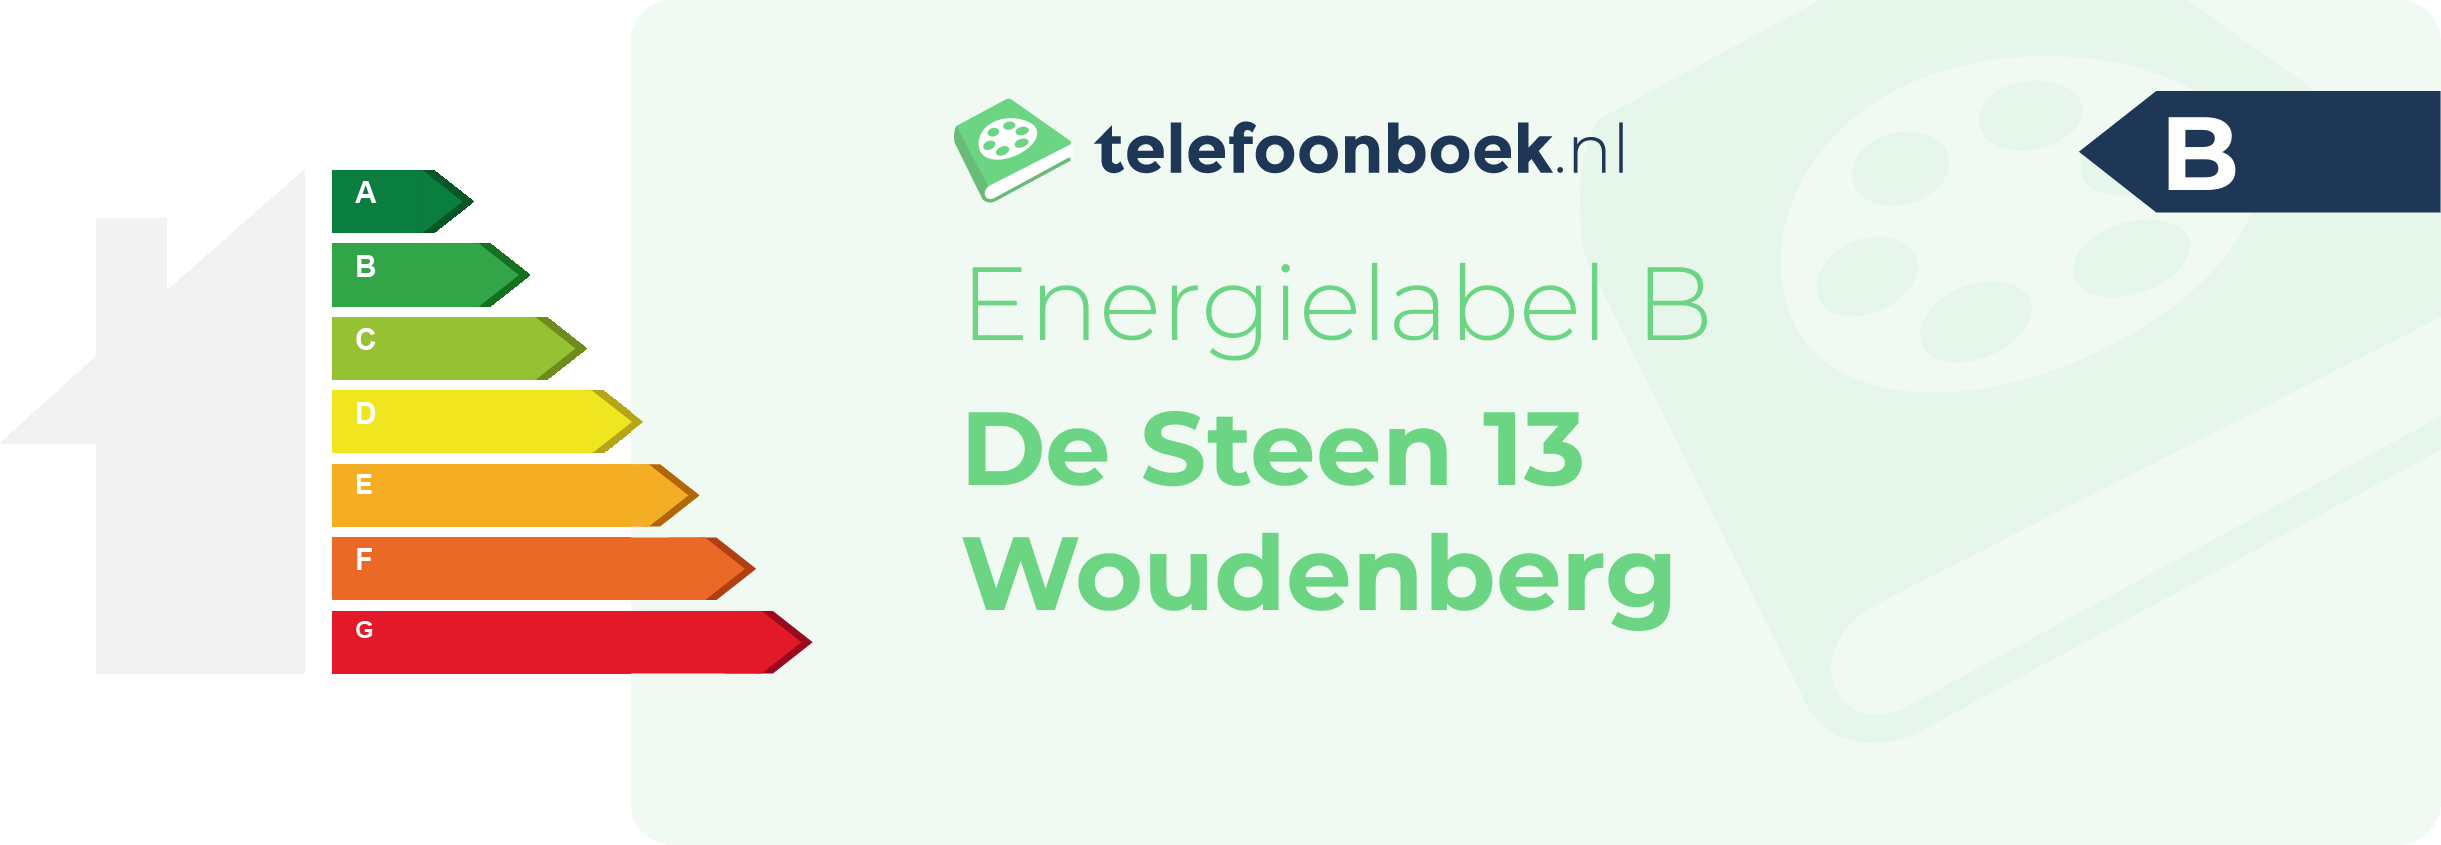 Energielabel De Steen 13 Woudenberg